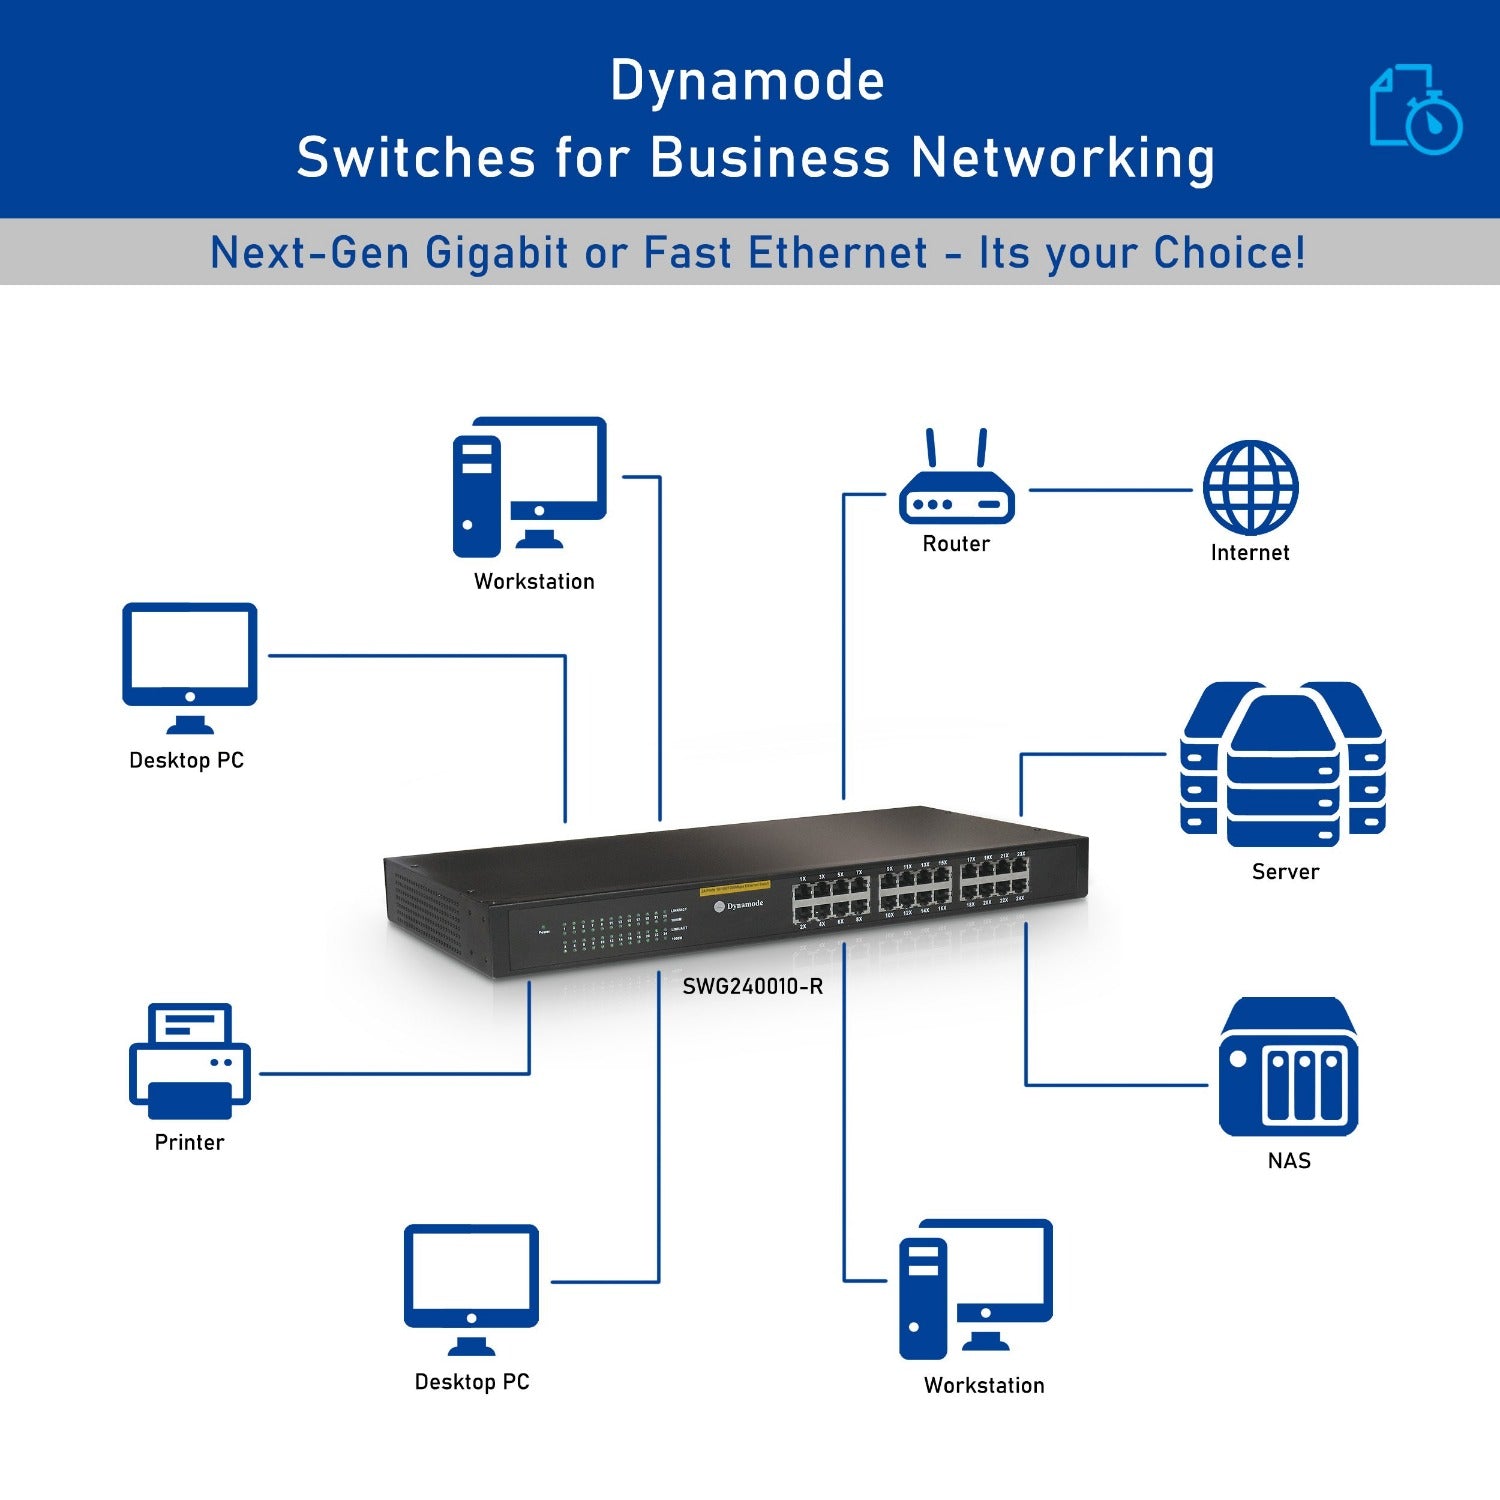 Dynamode SWG240010-R 24 Port Gigabit Rackmount Switch